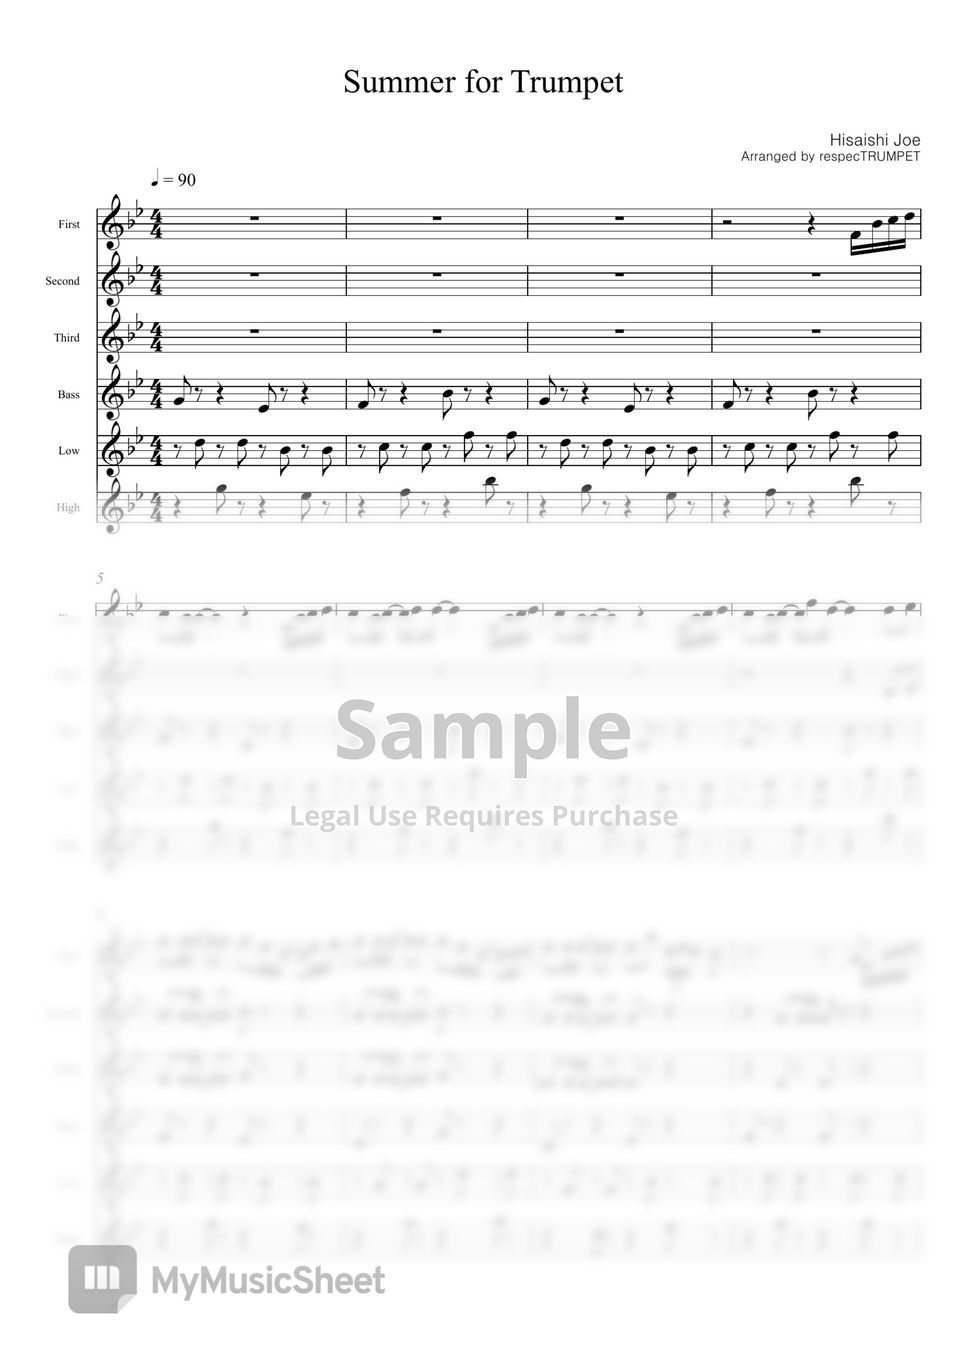 Hisaishi Joe - Summer (for Trumpet) by respecTRUMPET